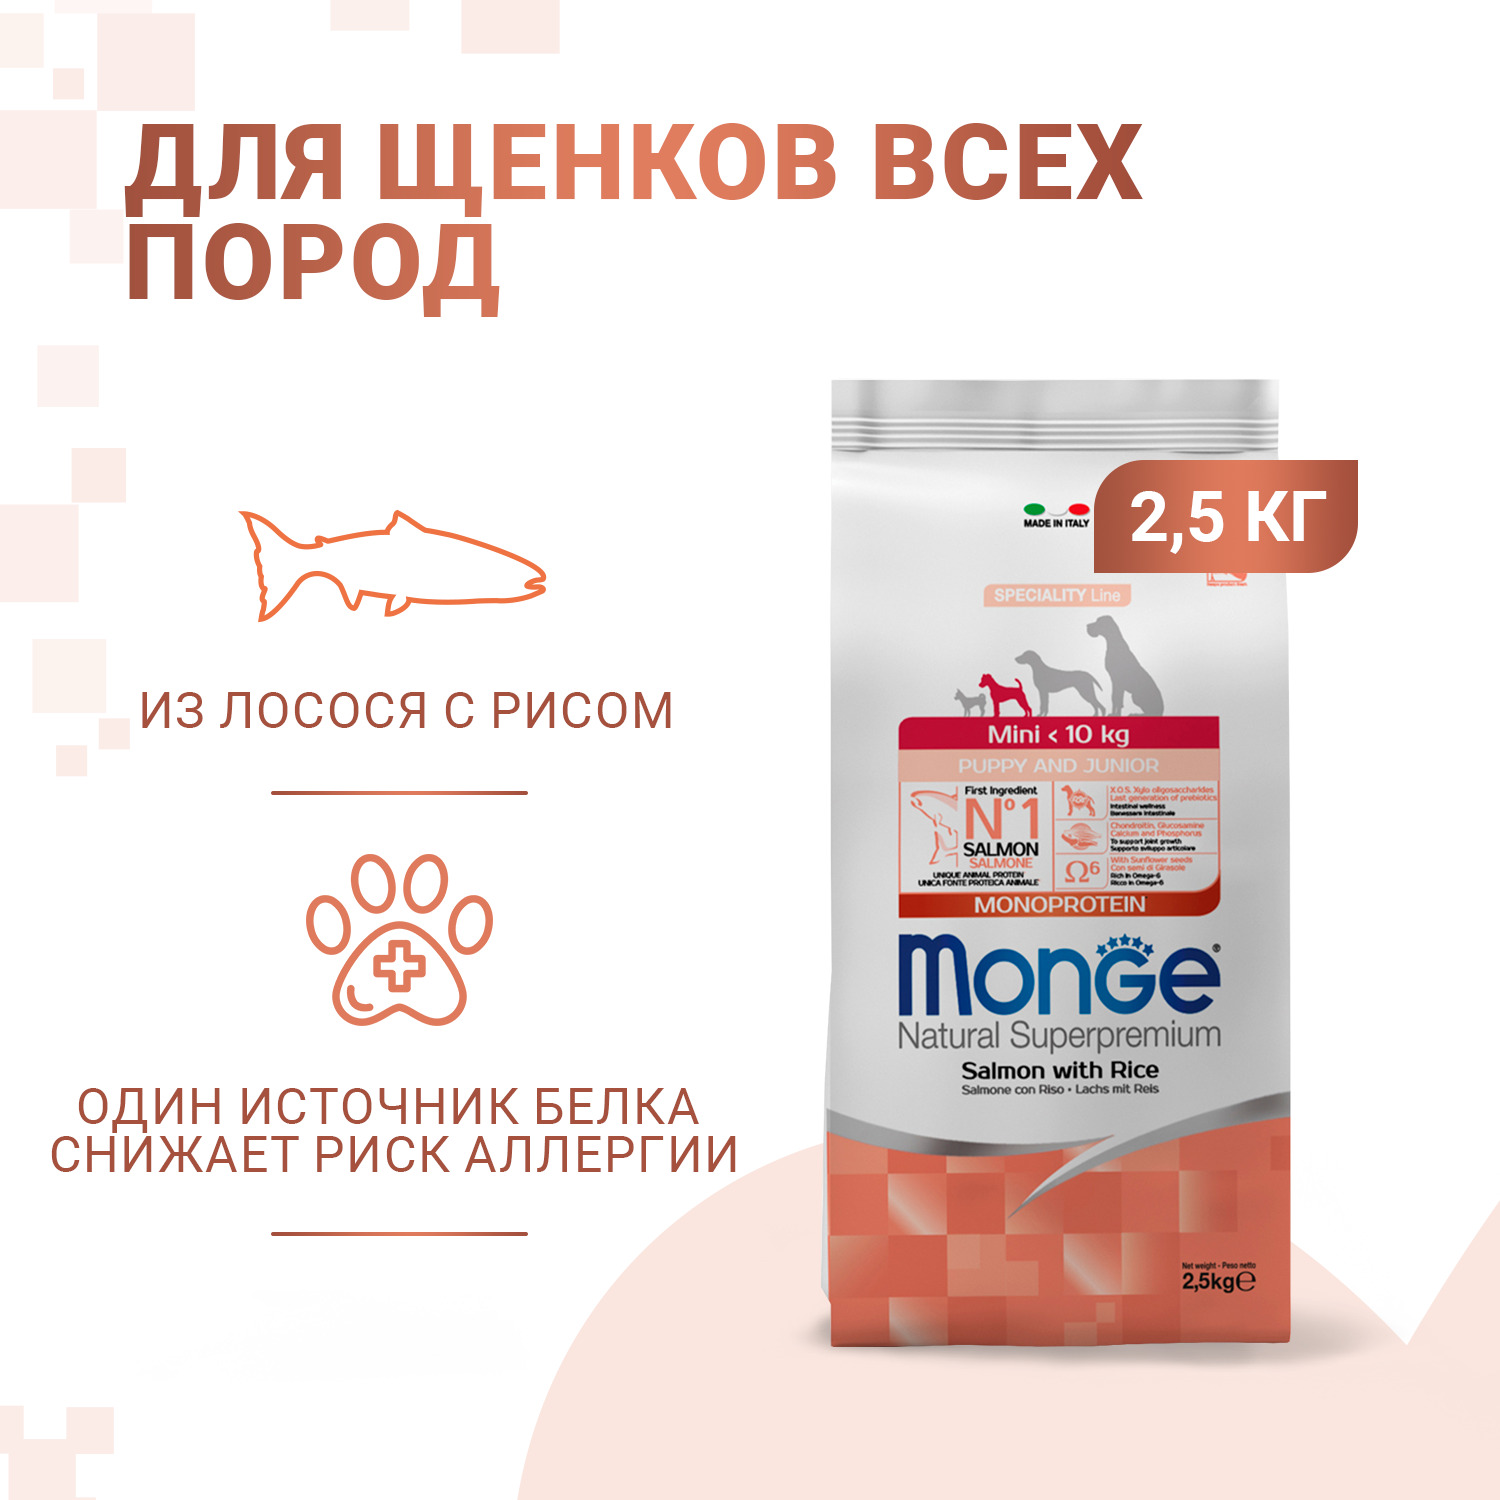 Monge Dog Speciality Line Monoprotein для щенков мелких пород лосось с рисом 2,5 кг